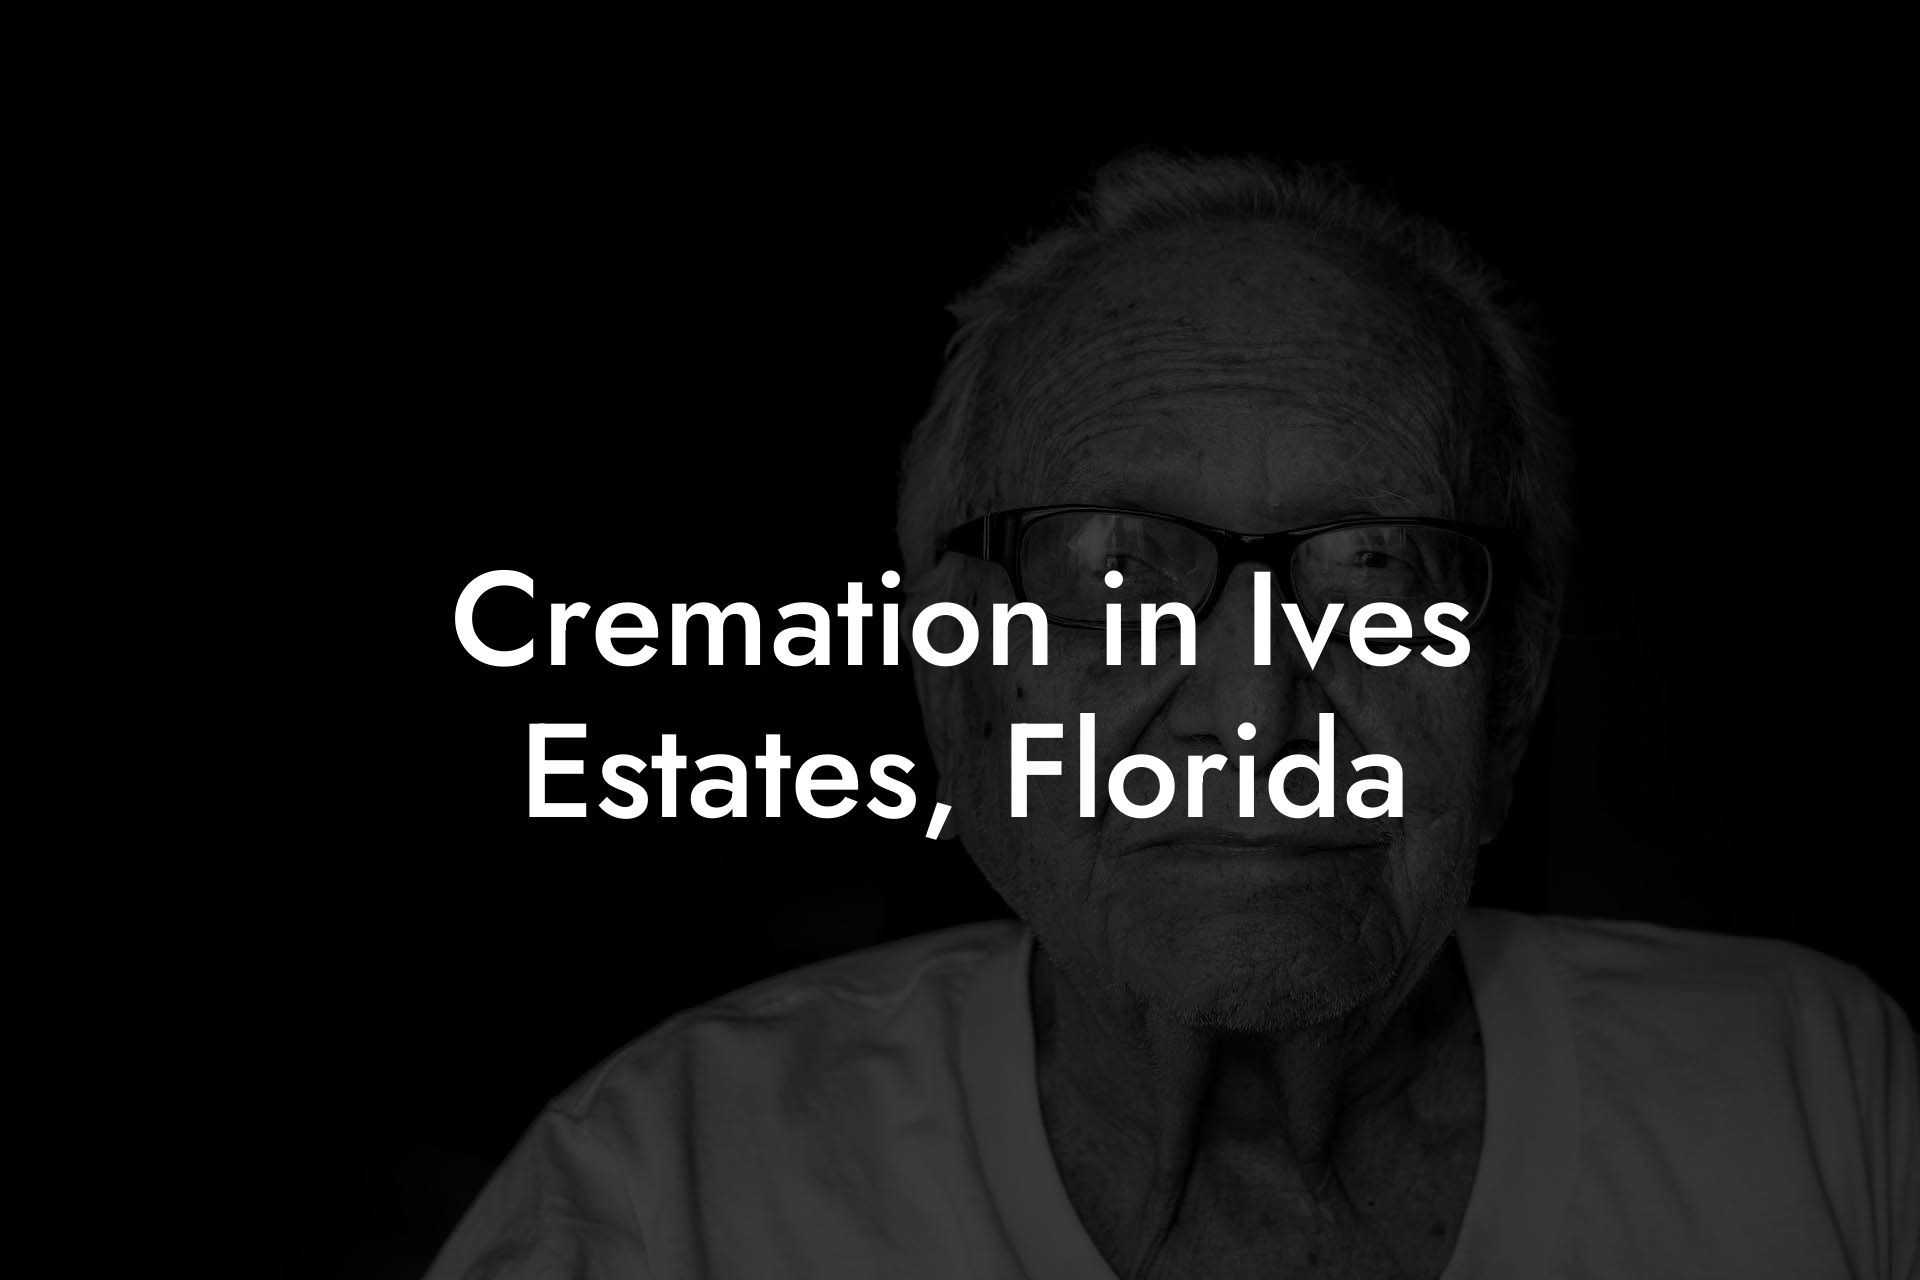 Cremation in Ives Estates, Florida